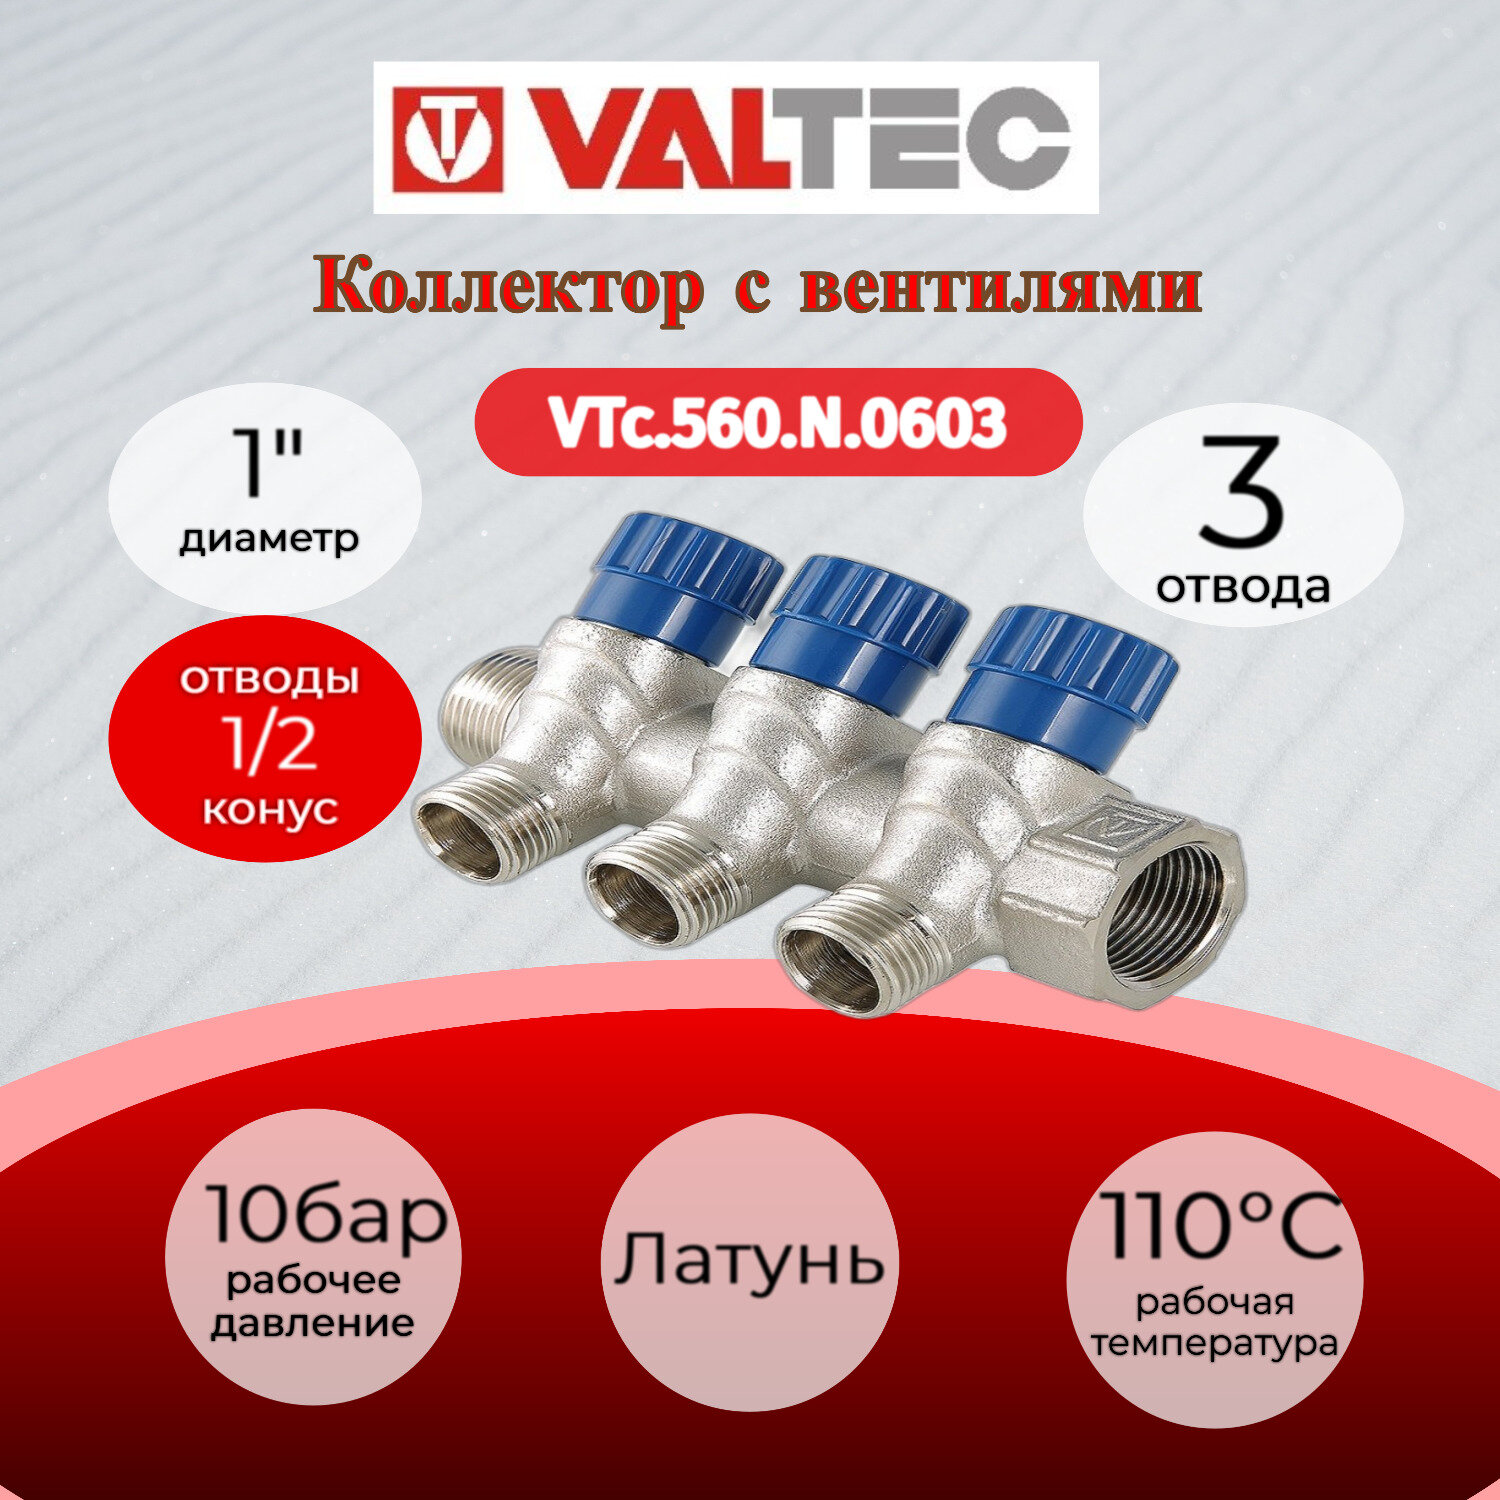 Коллектор с регулирующими вентилями, 1"х3 выхода 1/2" нар. VALTEC VTc.560. N.0603